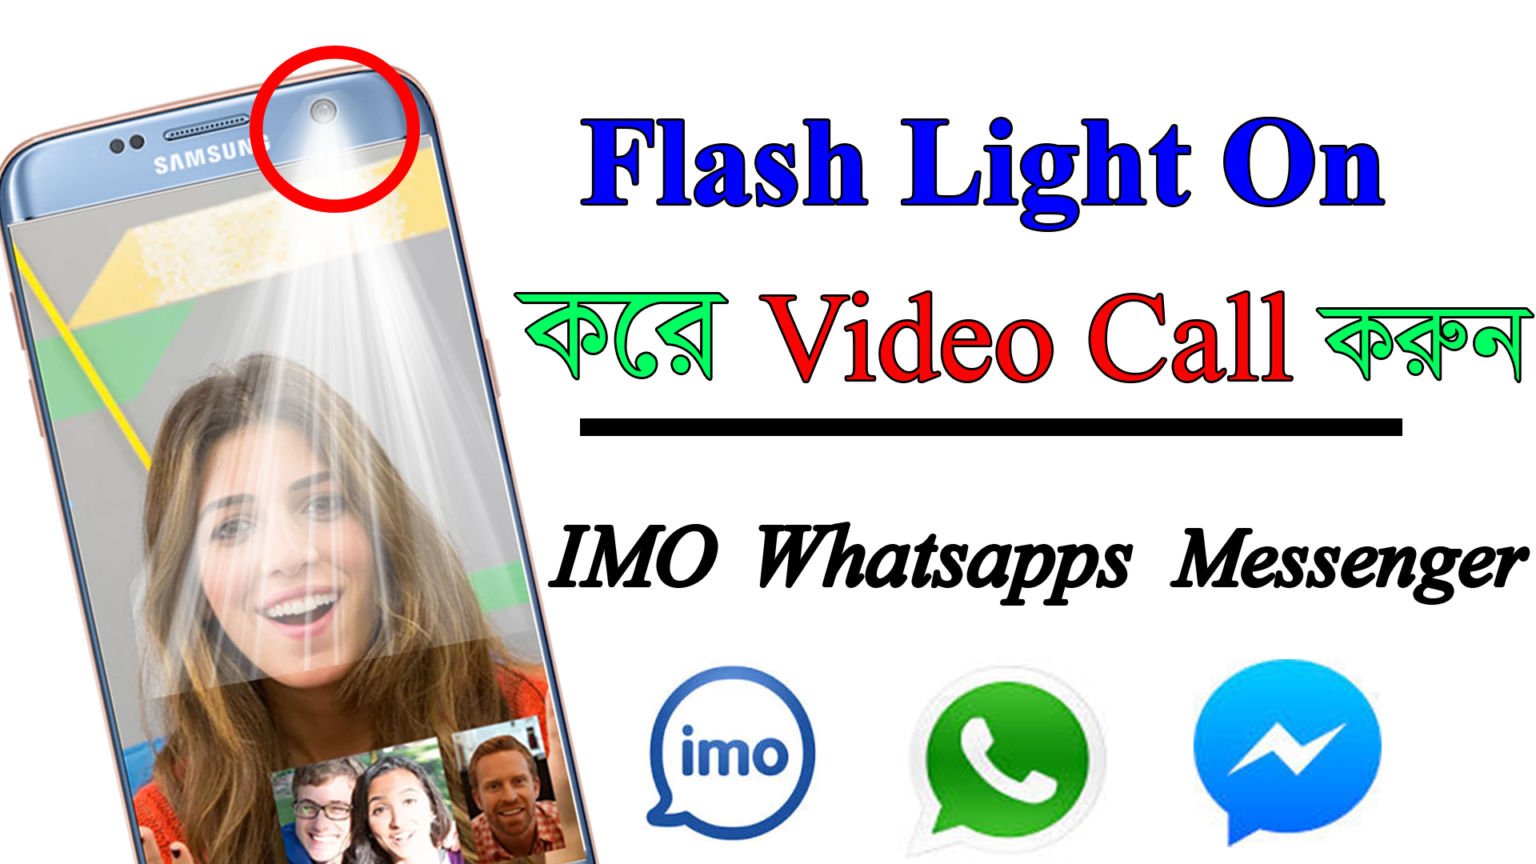 Front Flash On করে  রাতে ও Video Call করুন Imo,Whatsapps,Messenger, তে।Apps টি playstore,Google তে পাবেন না।